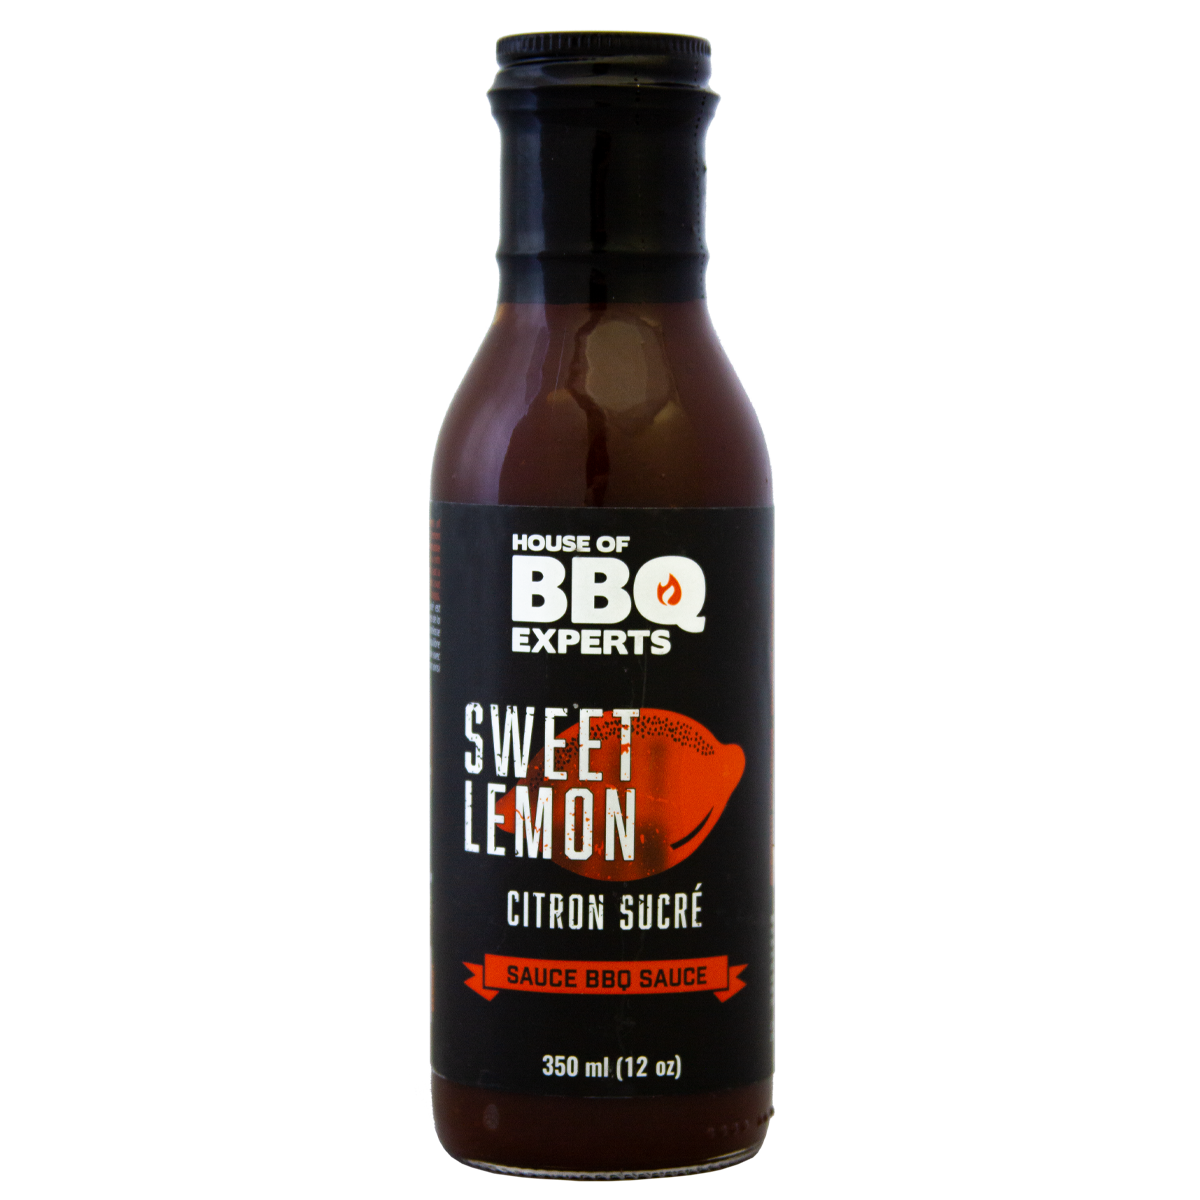 House of BBQ Experts Sweet Lemon Sauce 350ml (12.32oz)